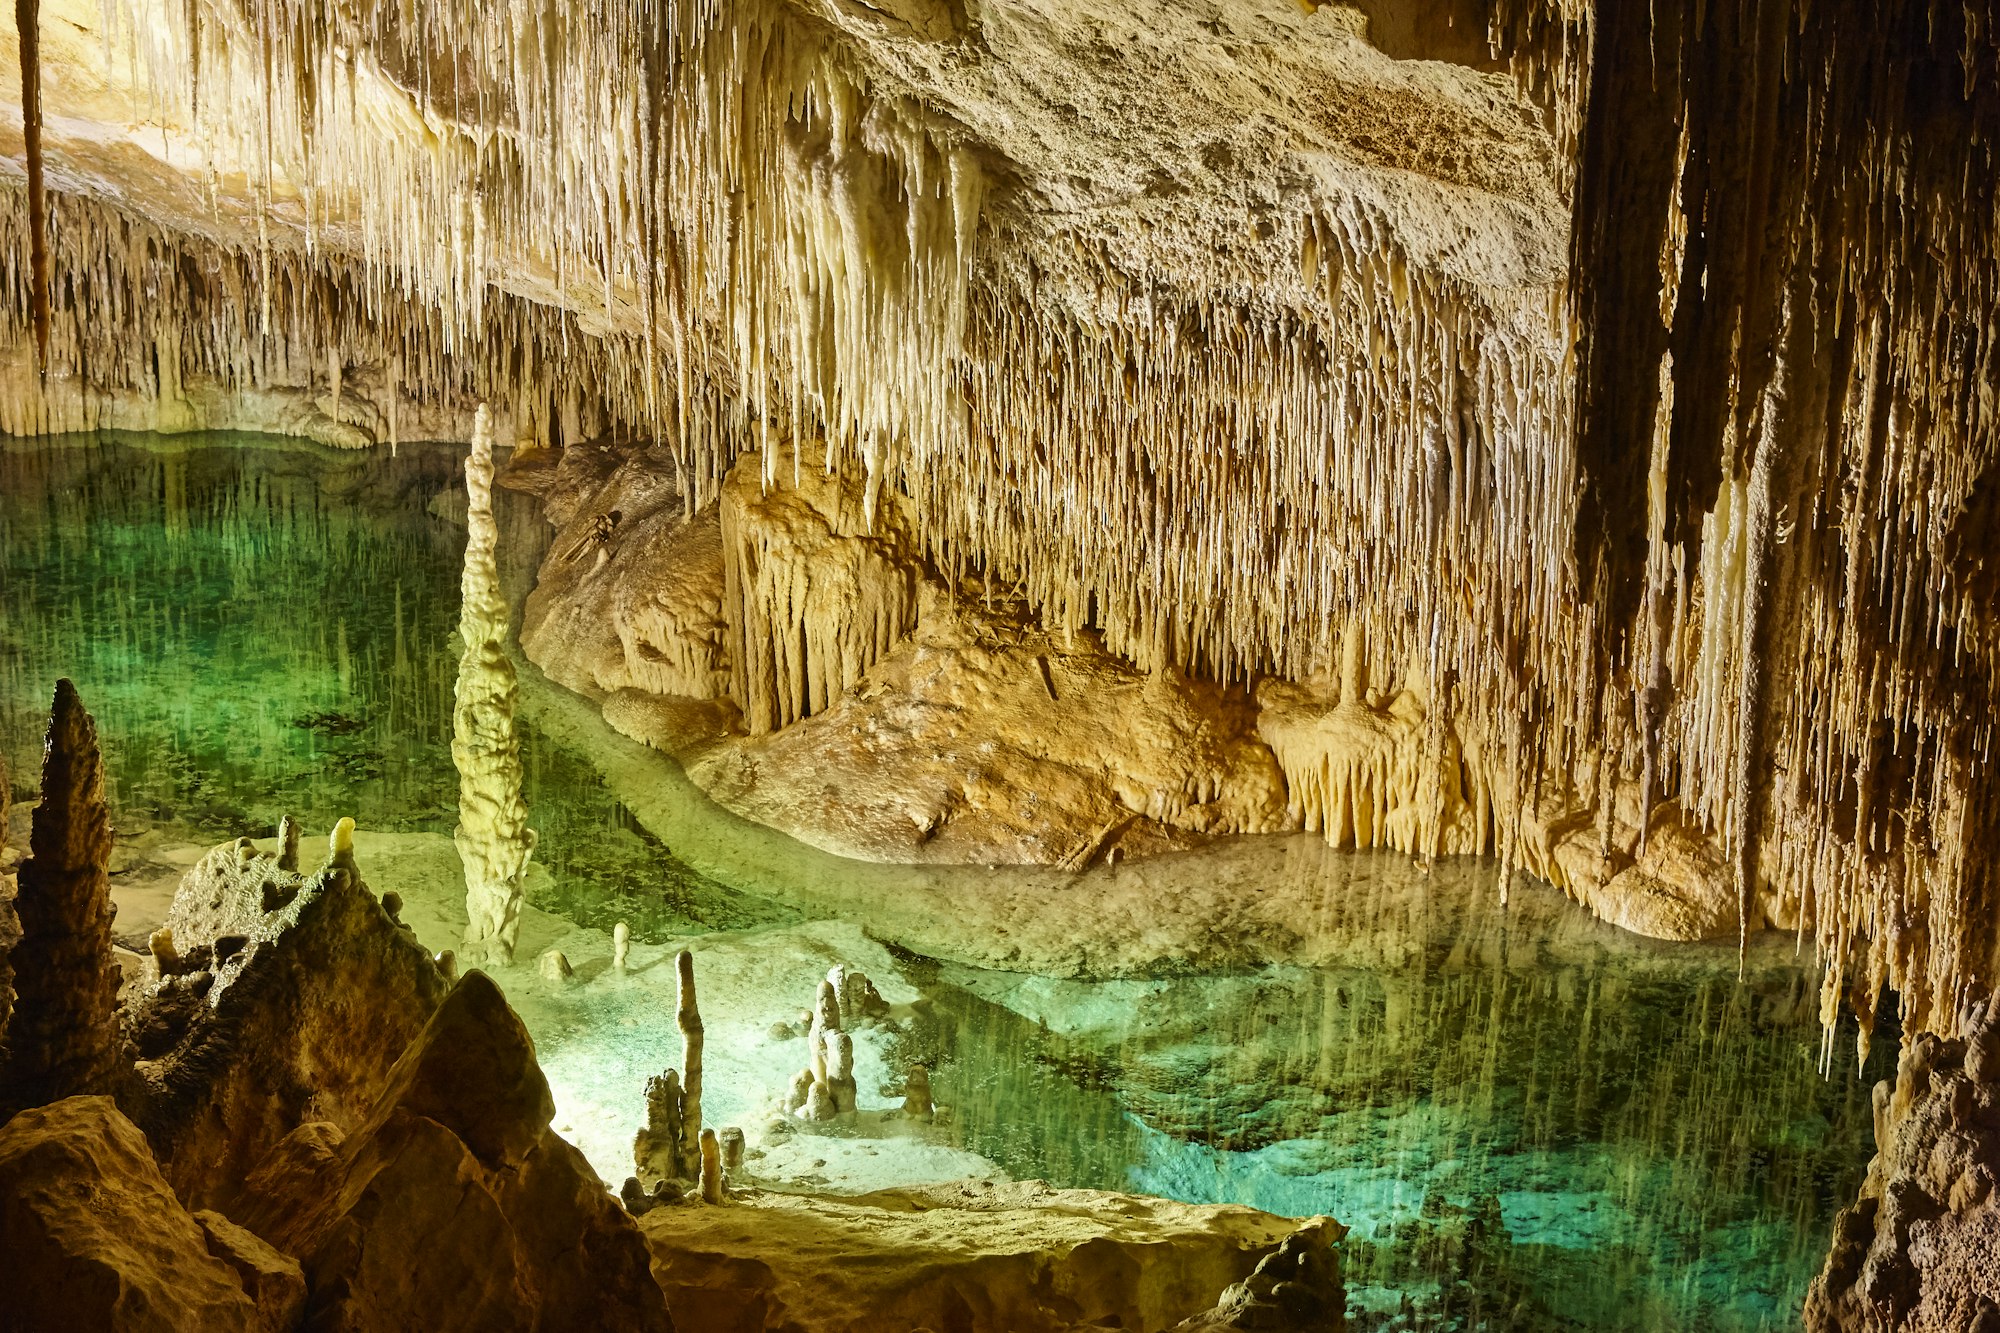 Green waters in a cave. Cuevas del Drach. Mallorca, Spain